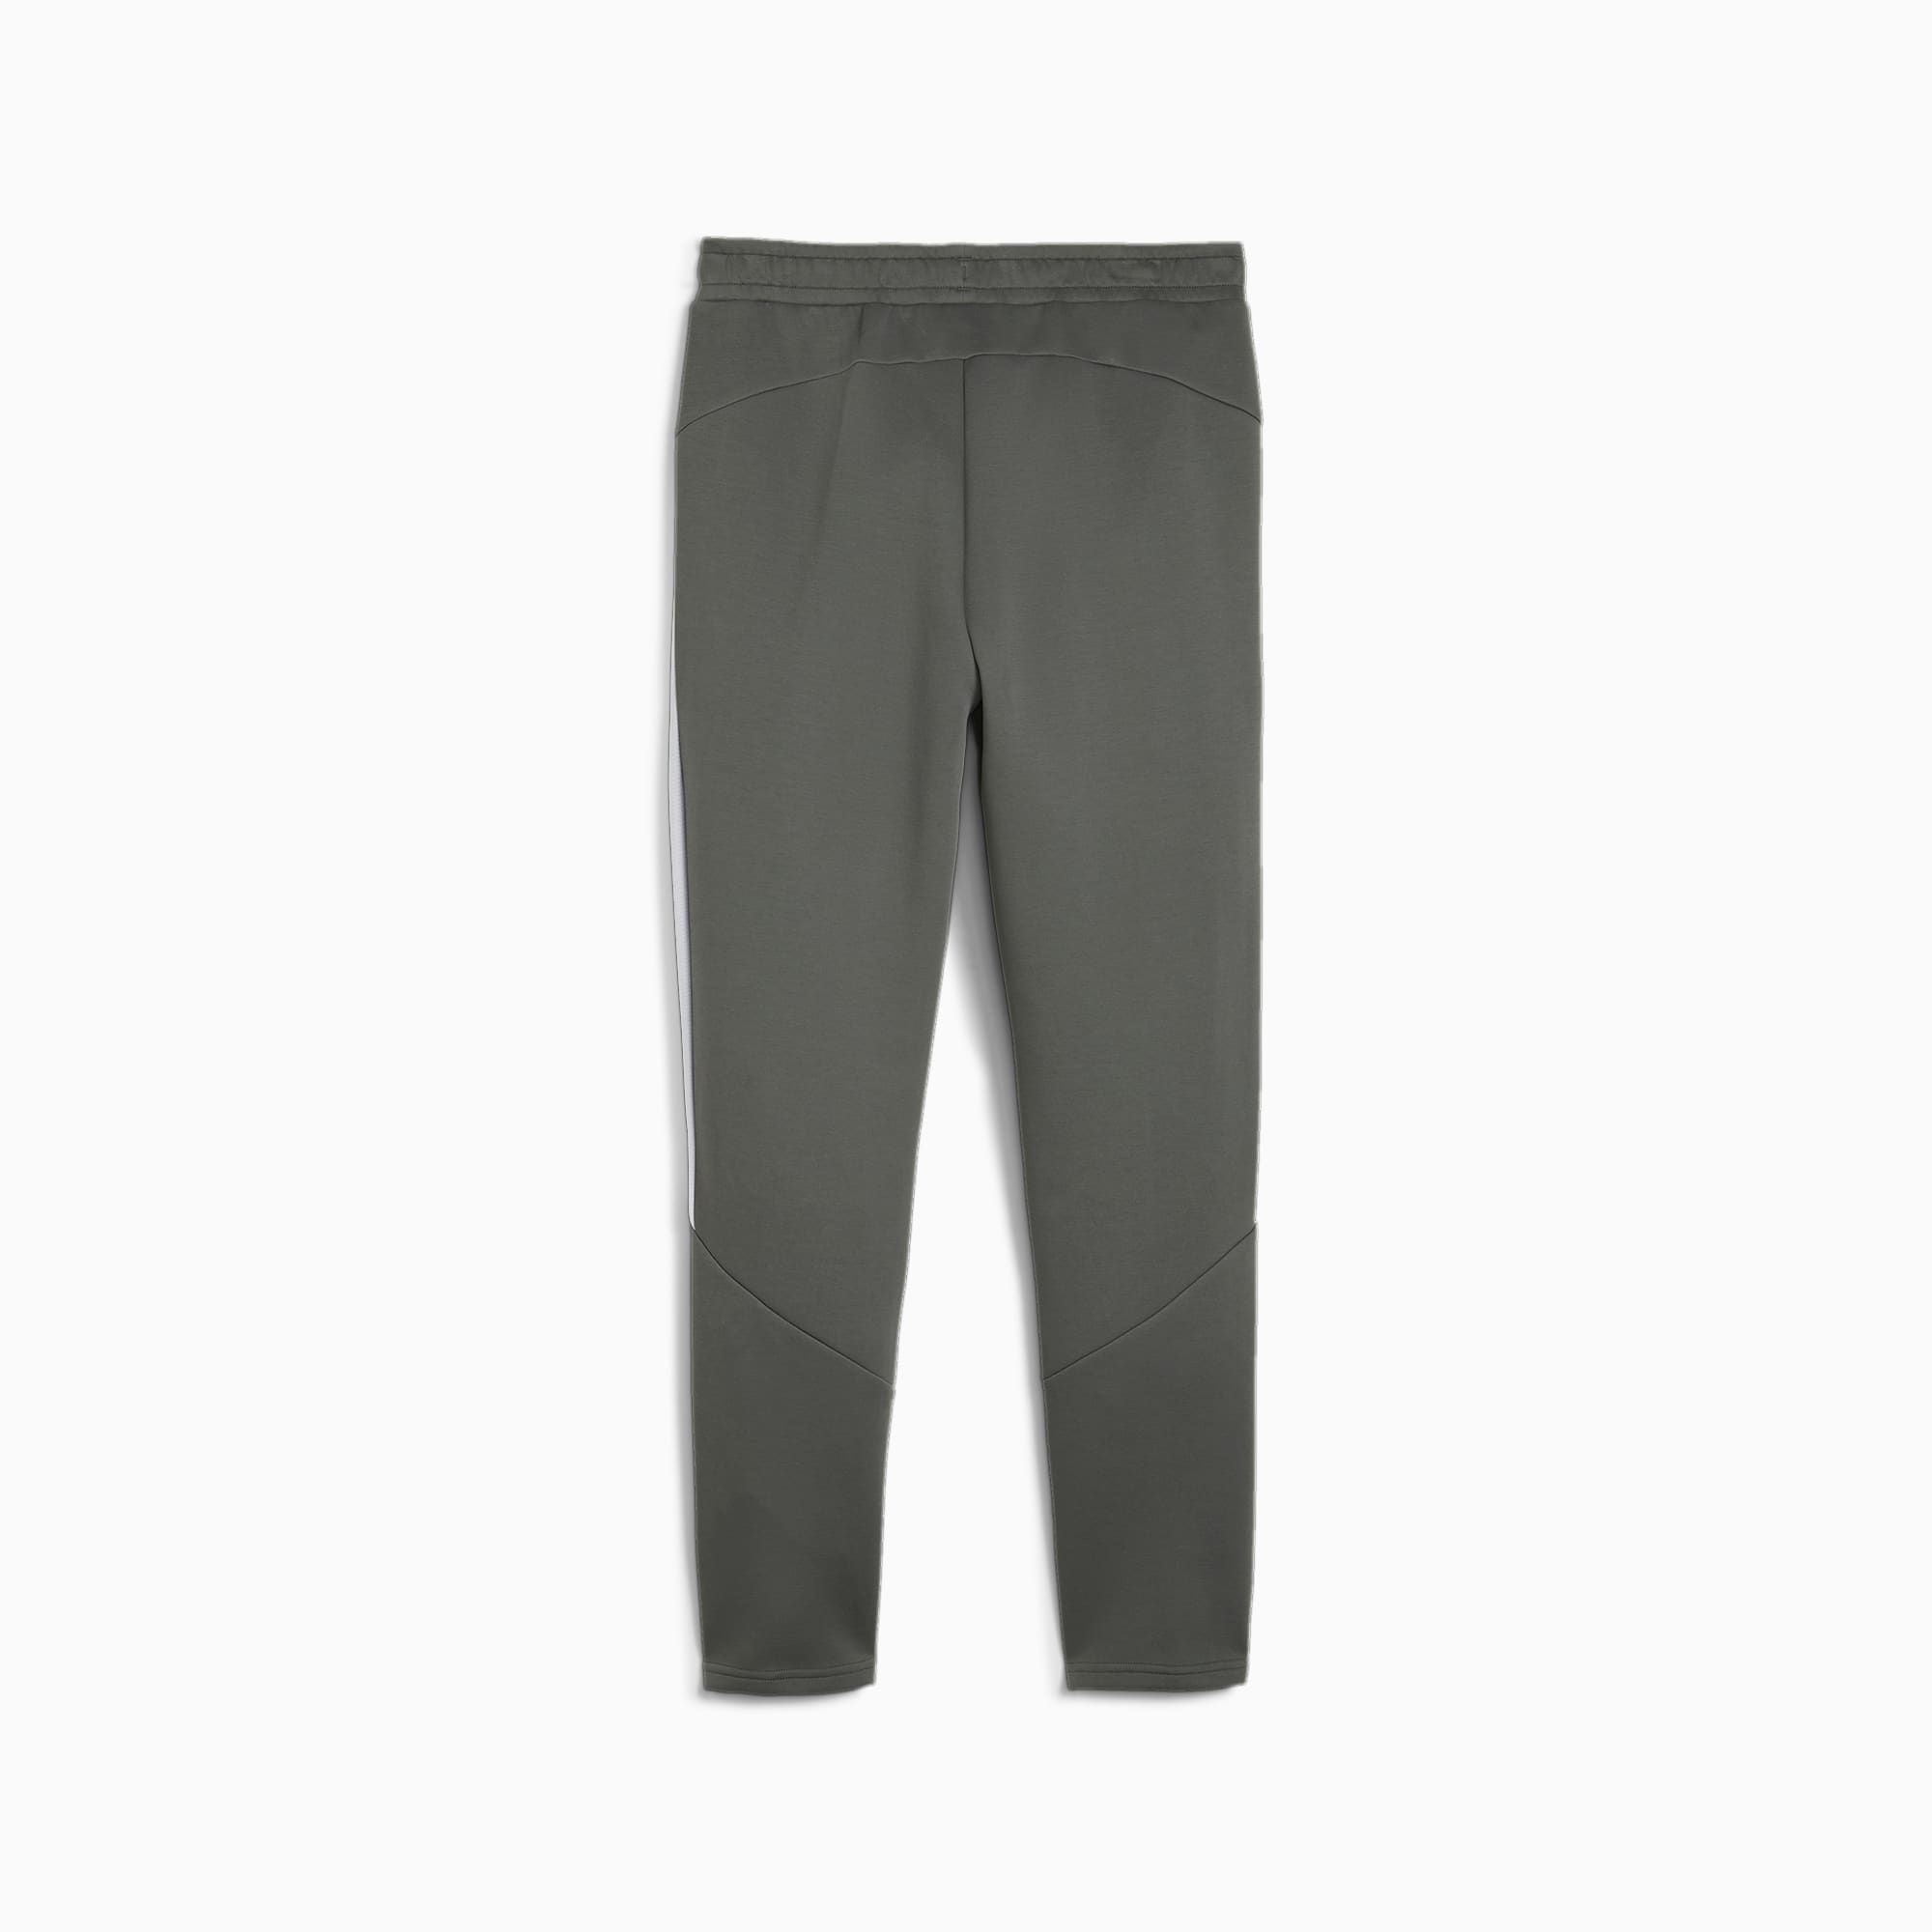 PUMA Evostripe Men's Sweatpants, Mineral Grey